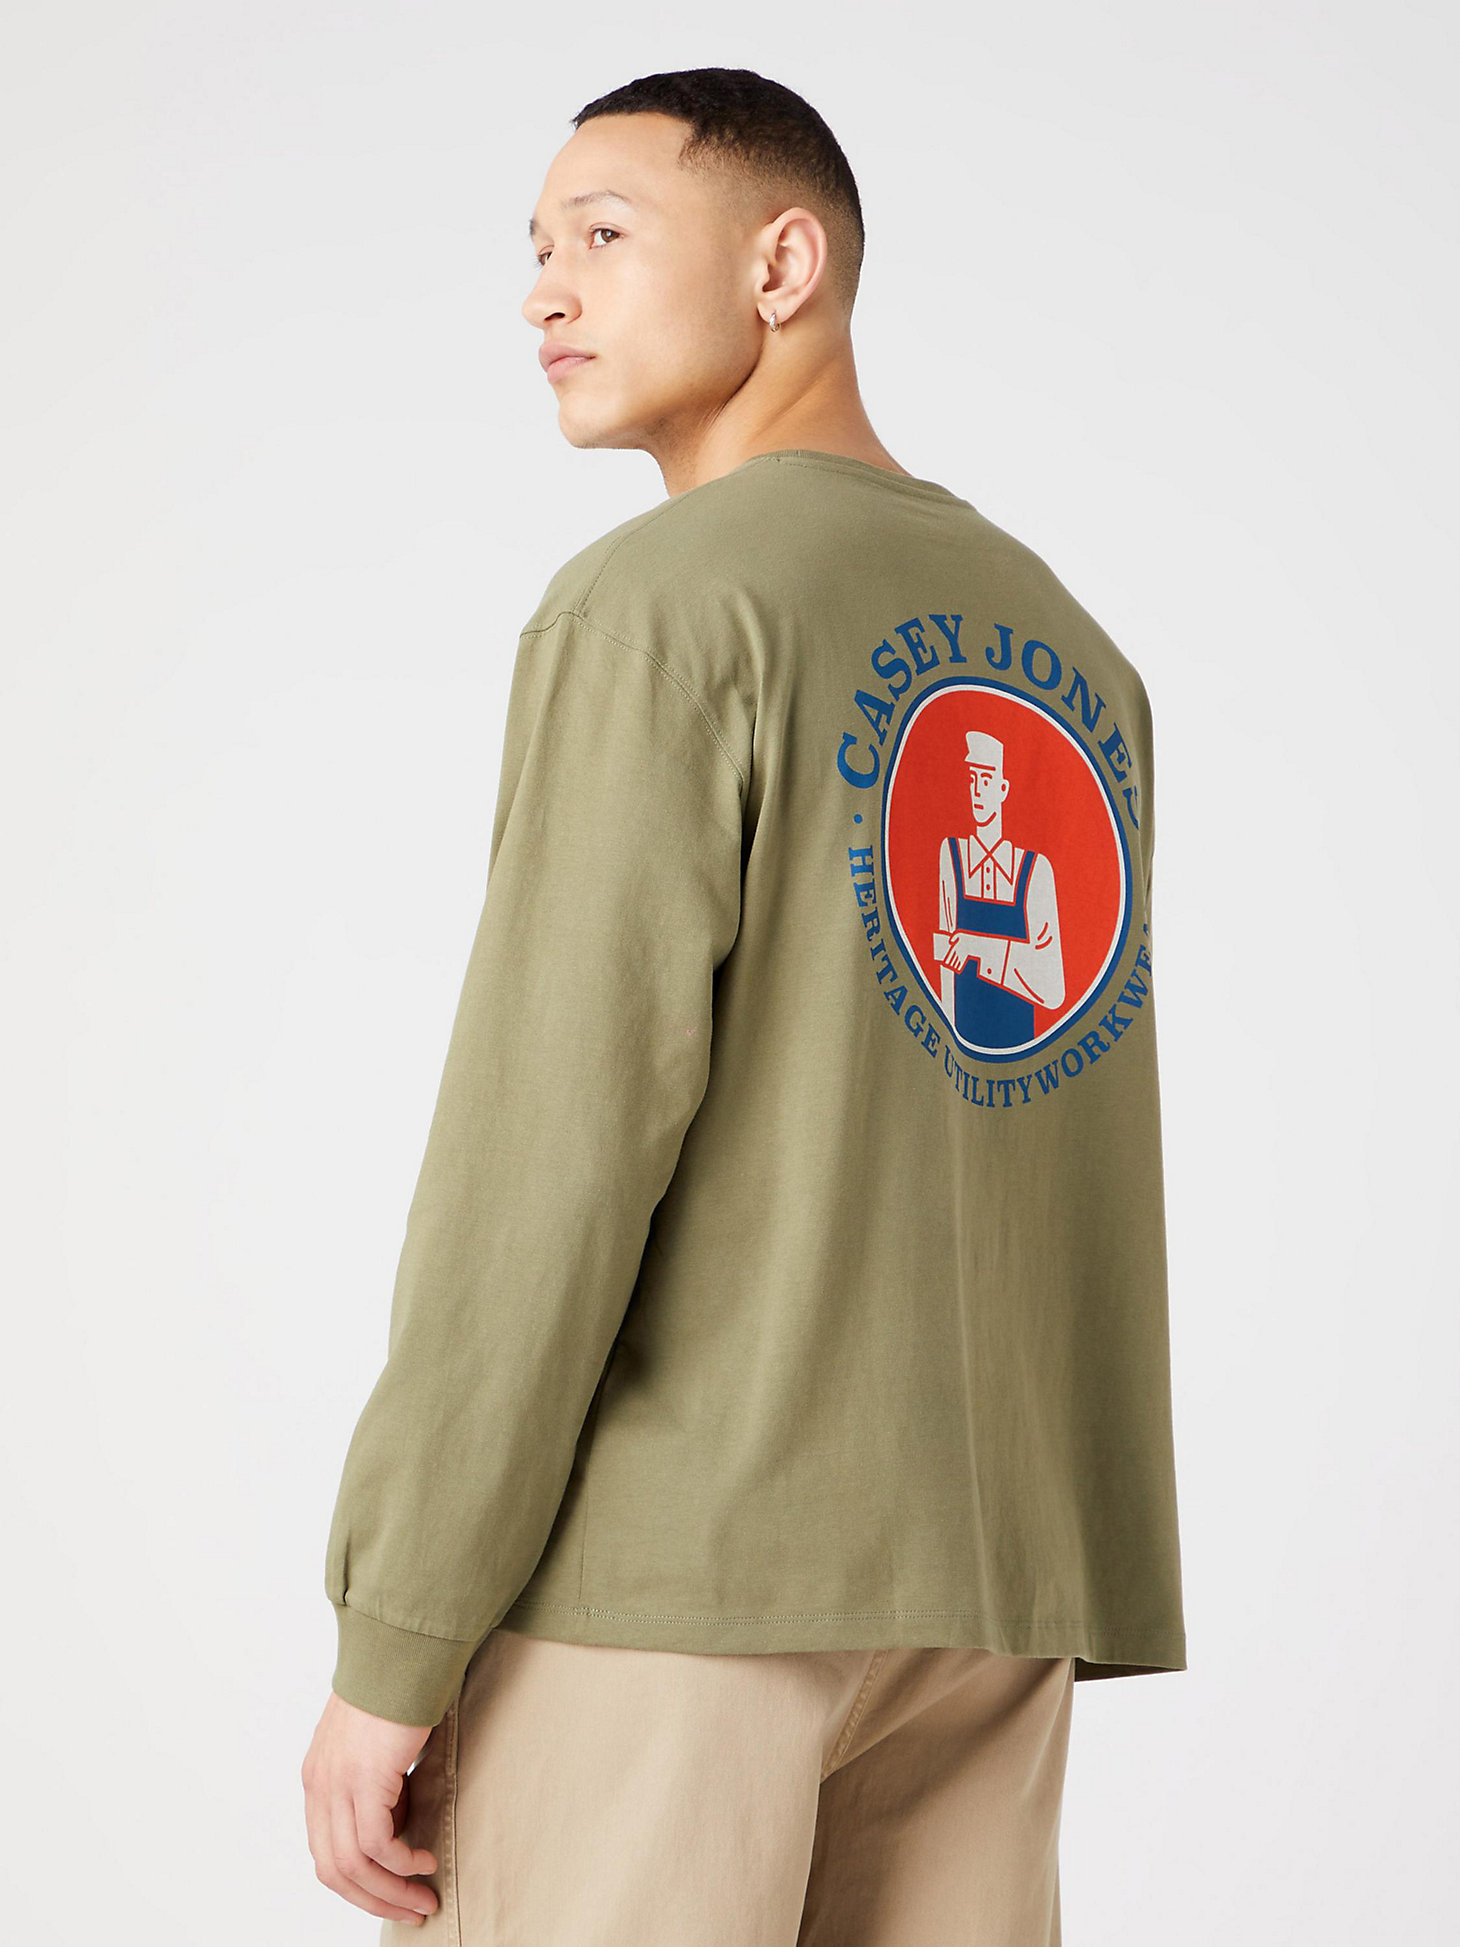 Men's Casey Jones Vintage Fit T-Shirt in Deep Lichen Green alternative view 1